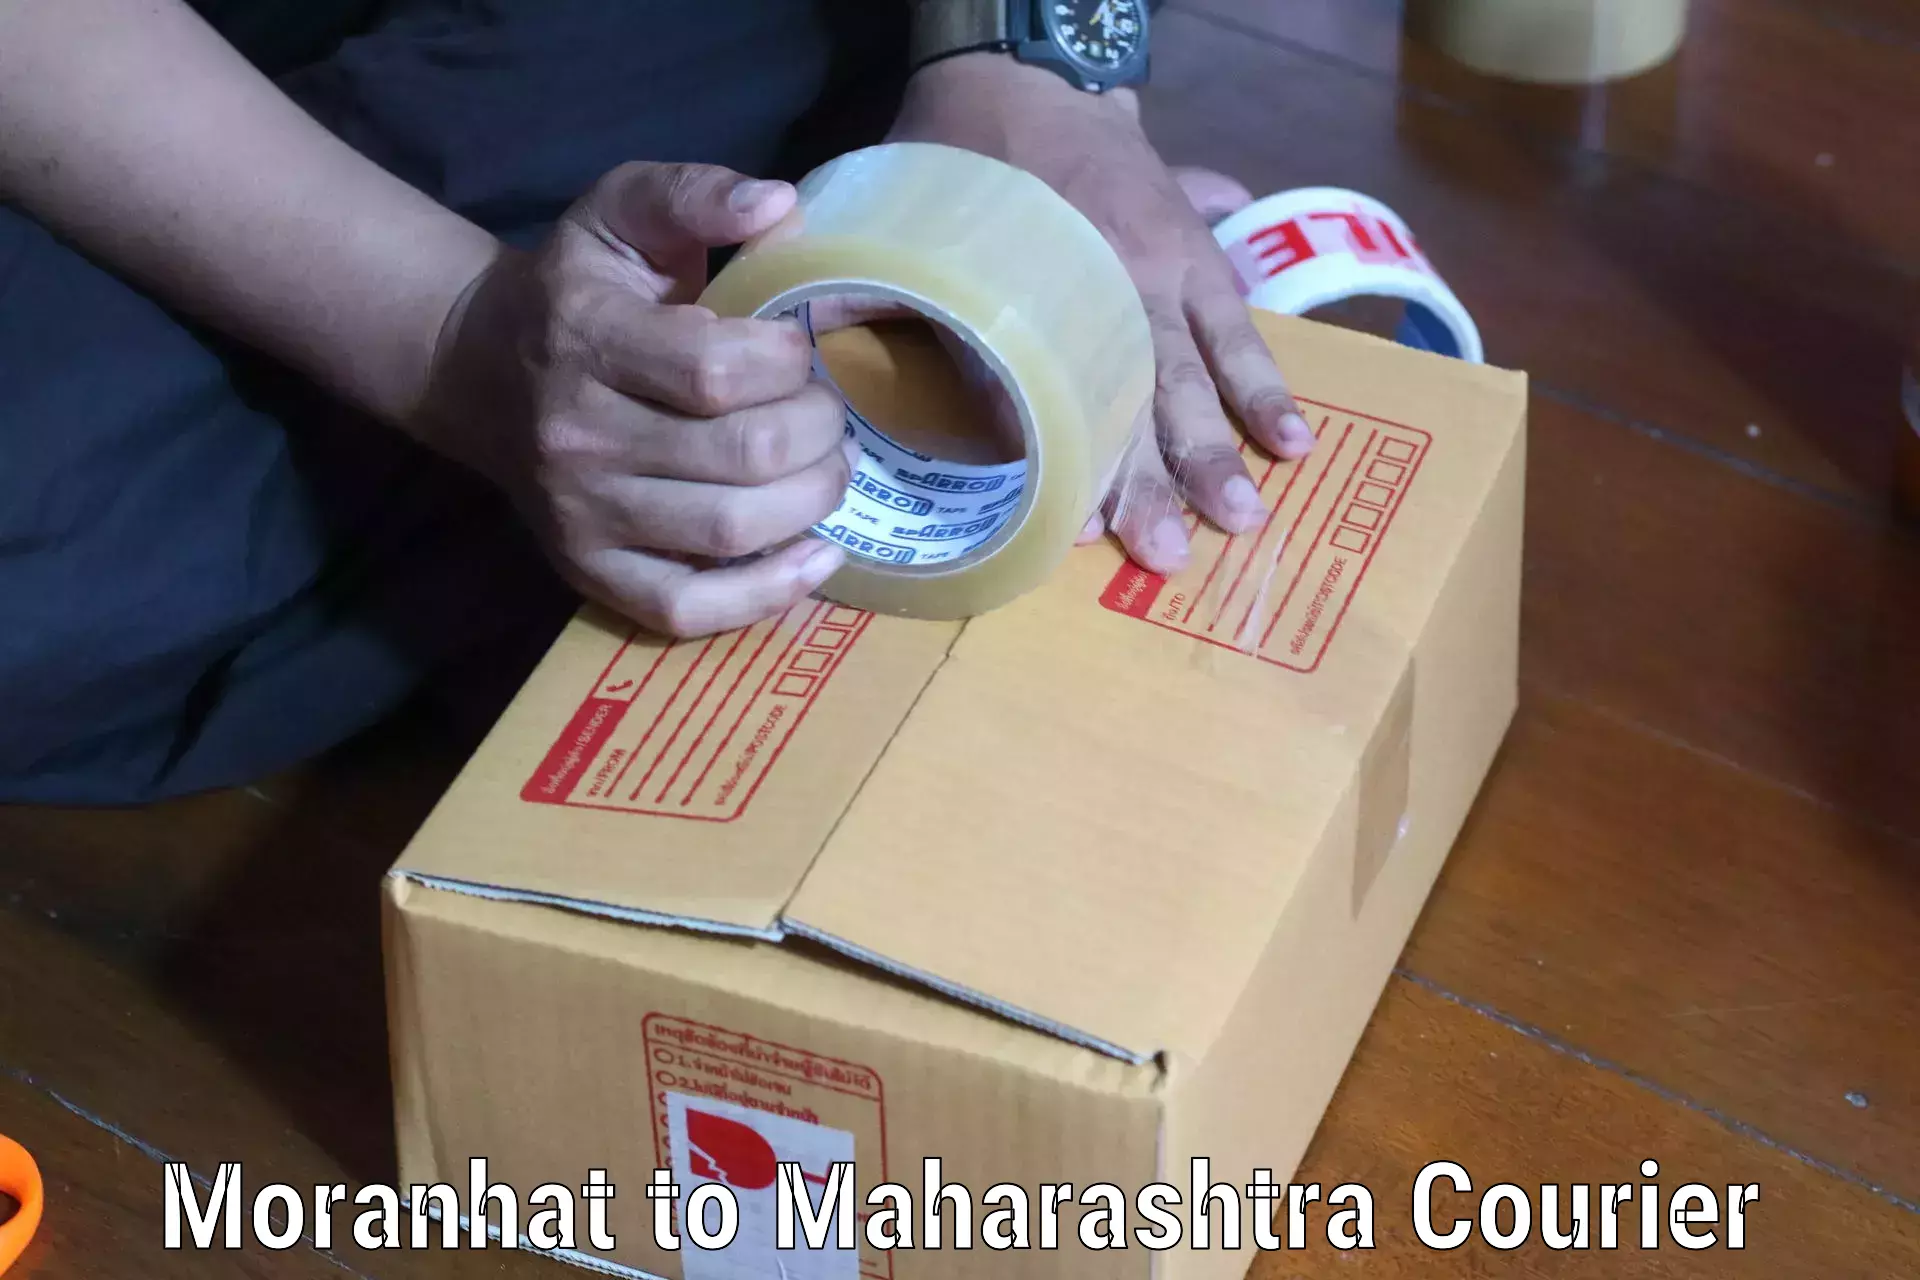 Courier service booking Moranhat to Rajura